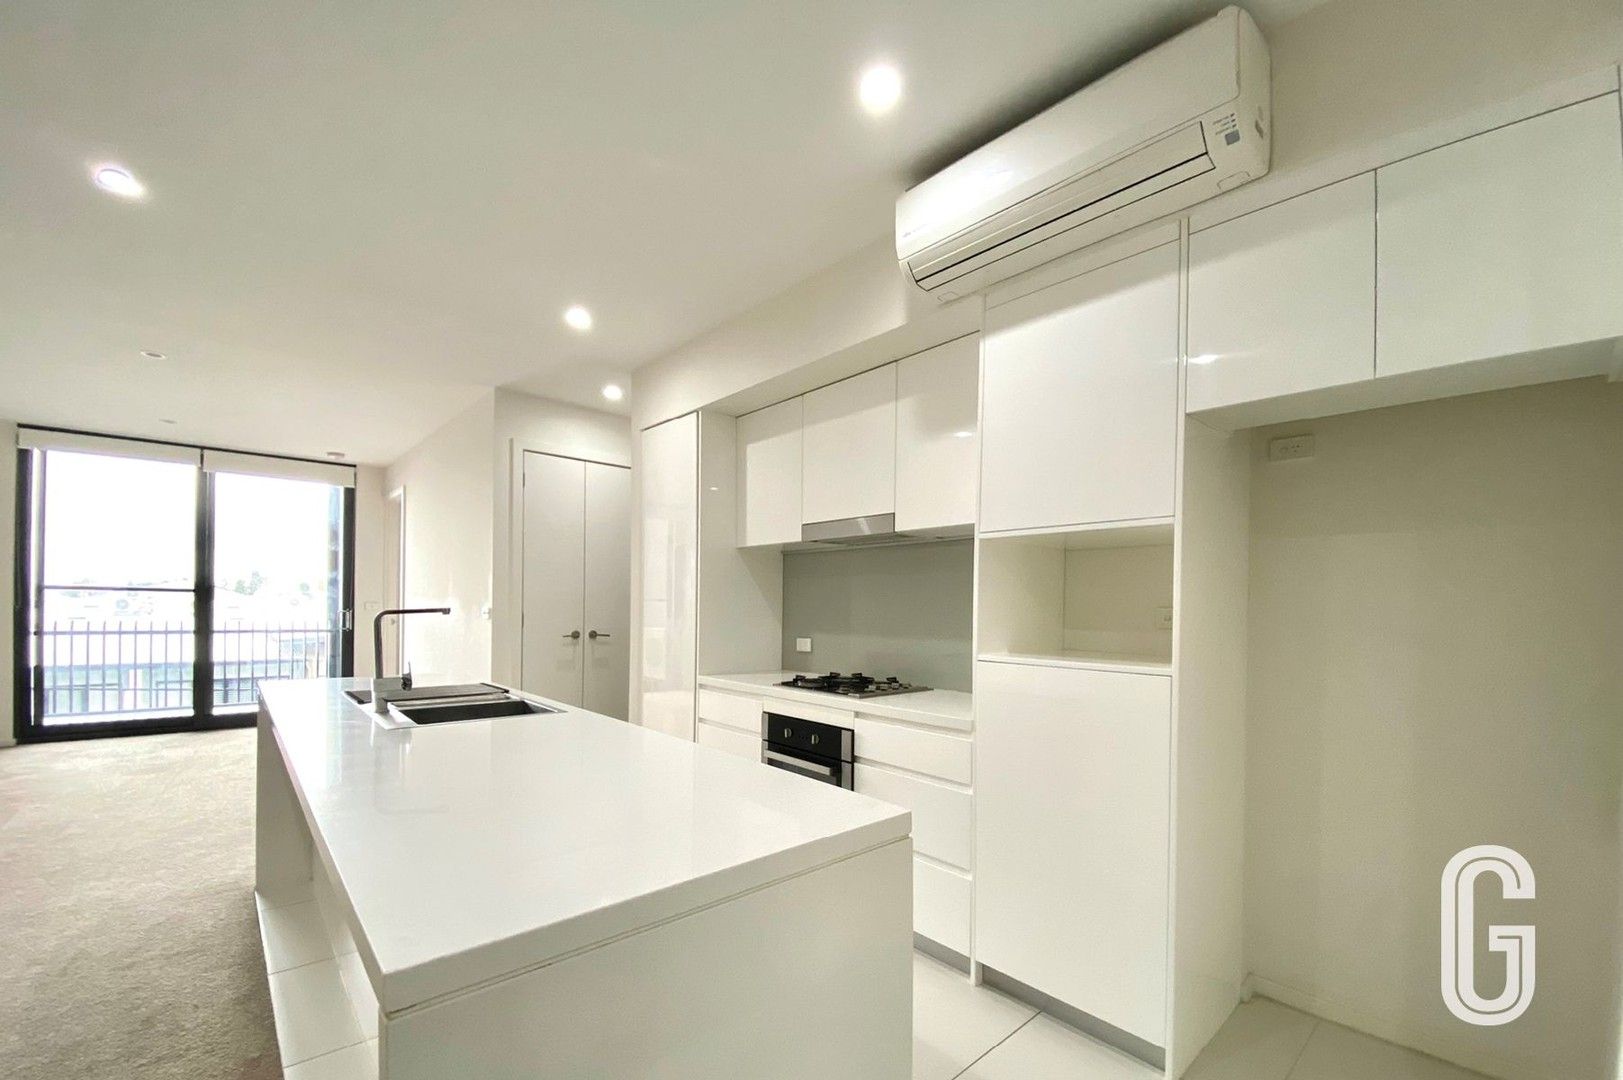 2 bedrooms Apartment / Unit / Flat in 204/18 Throsby Street WICKHAM NSW, 2293